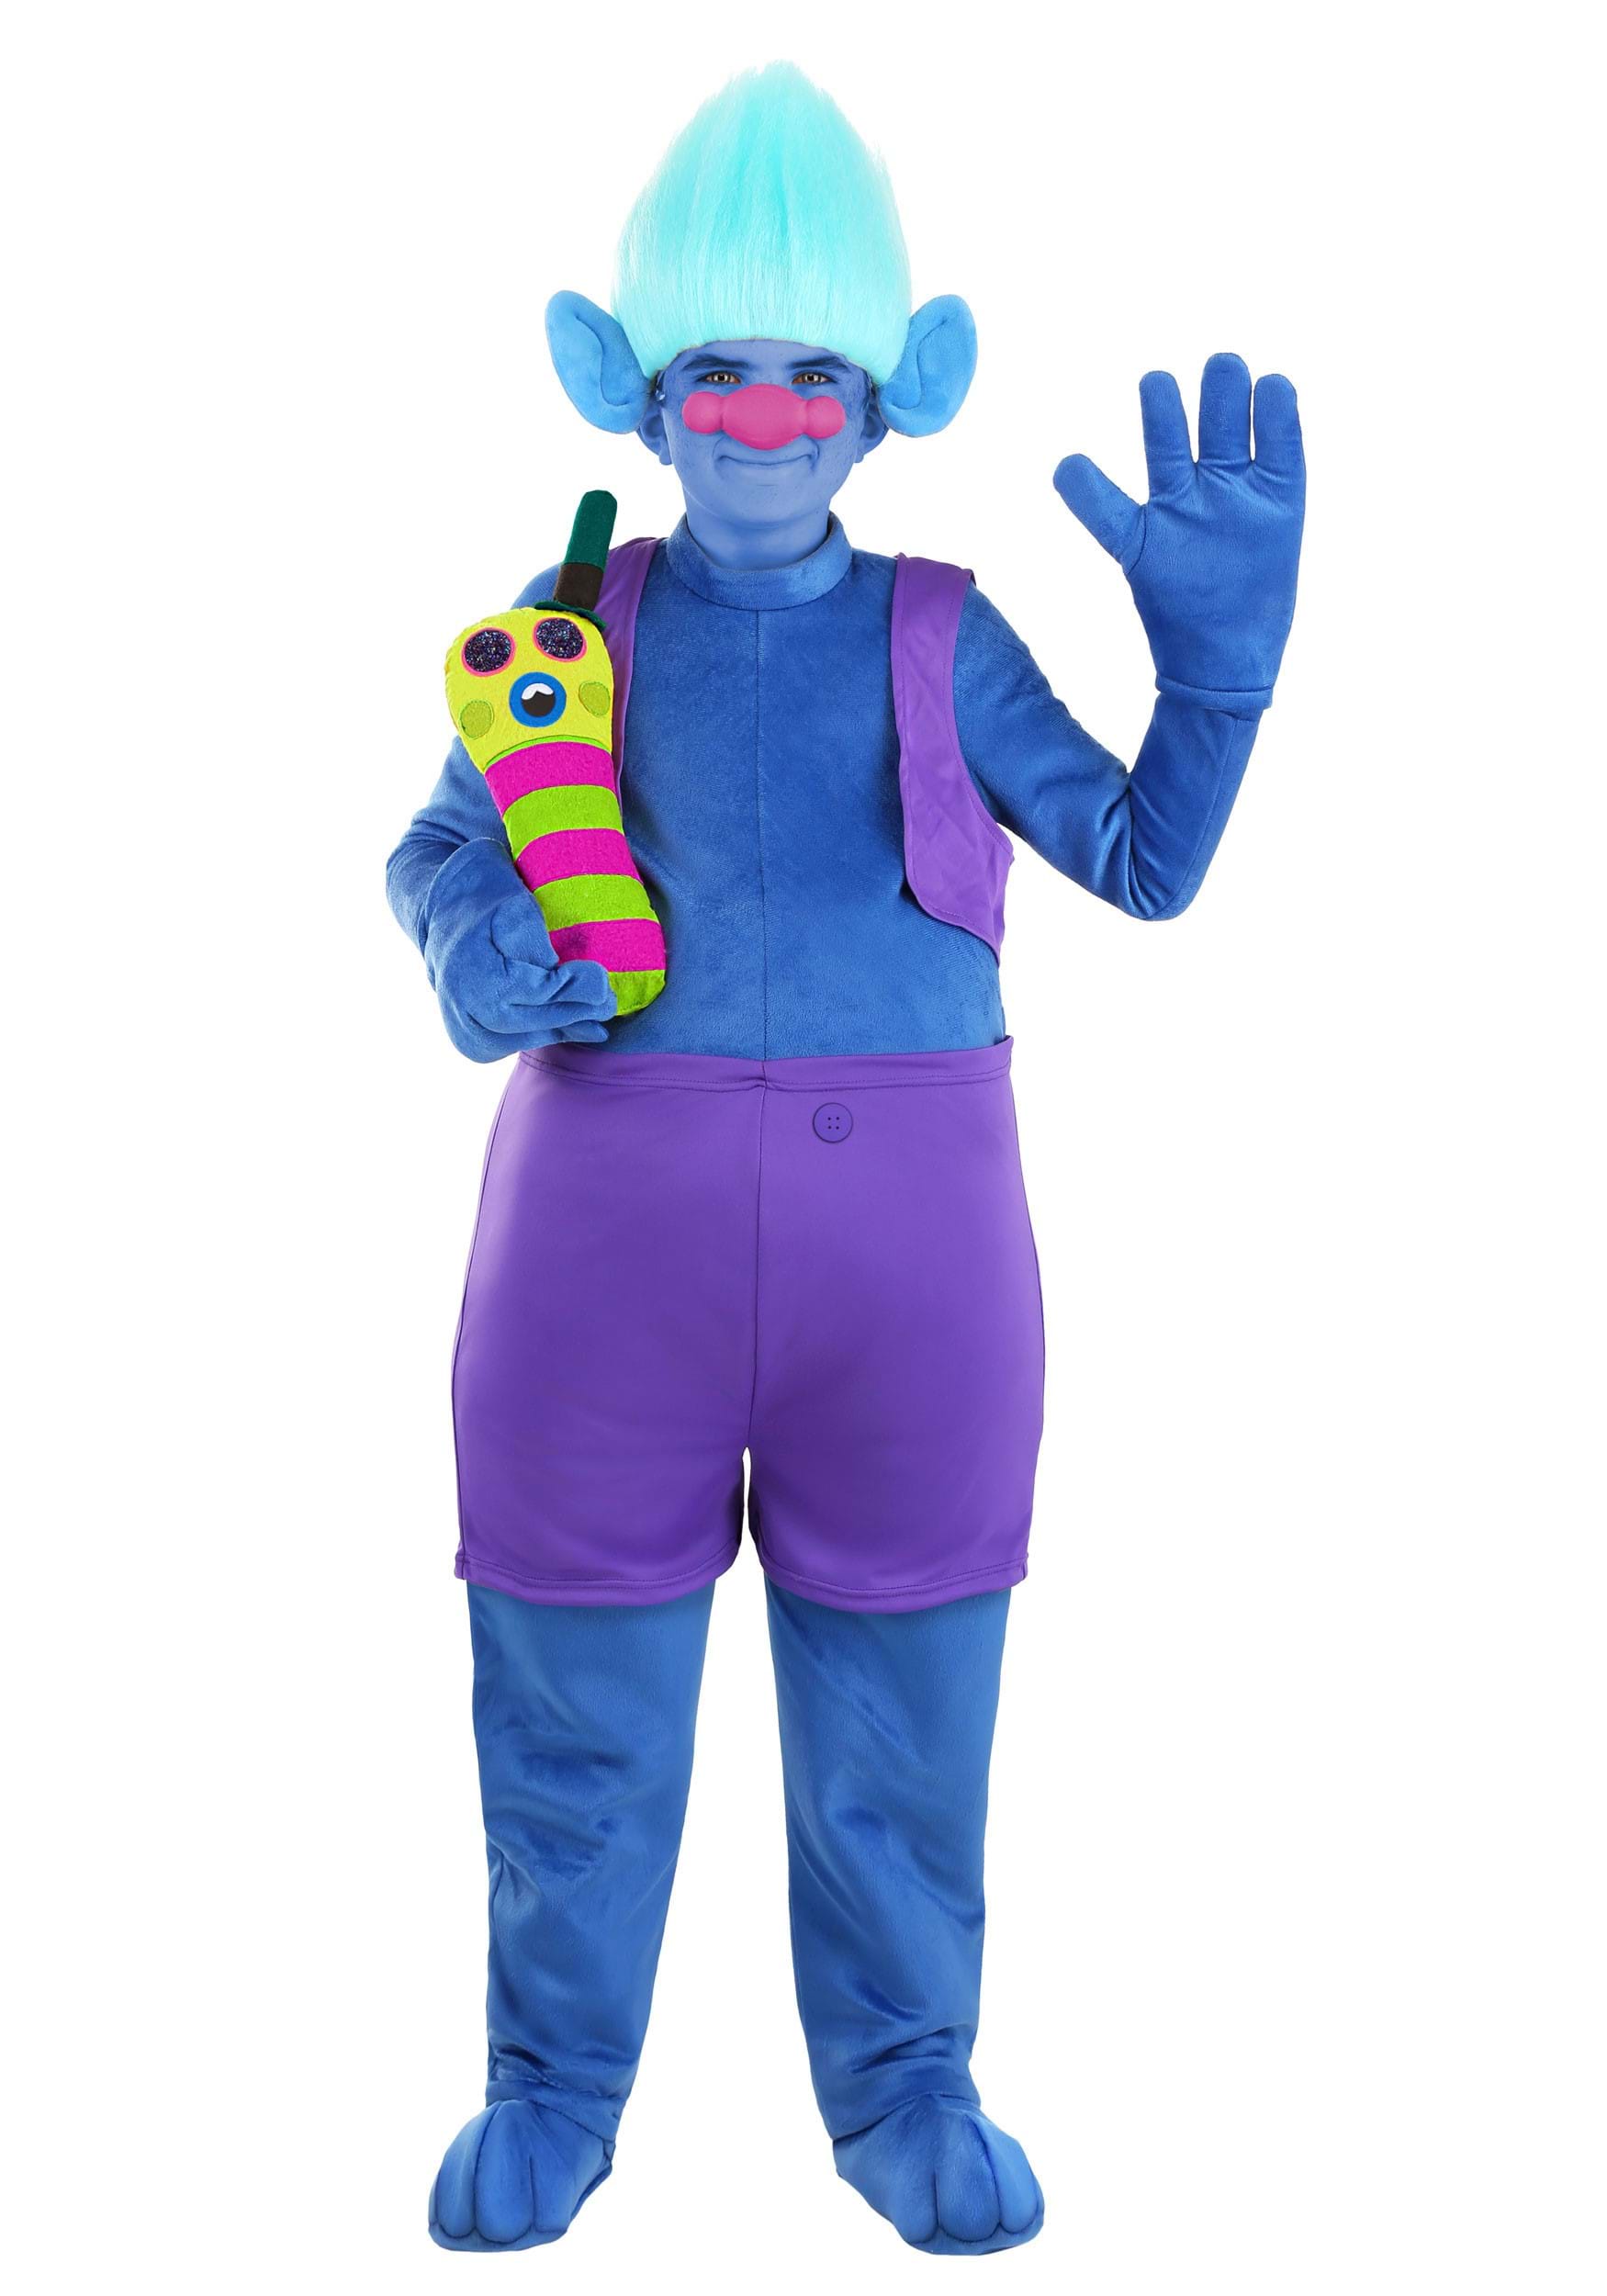 Image of Biggie Costume from Trolls for Boys ID FUN1523CH-XL